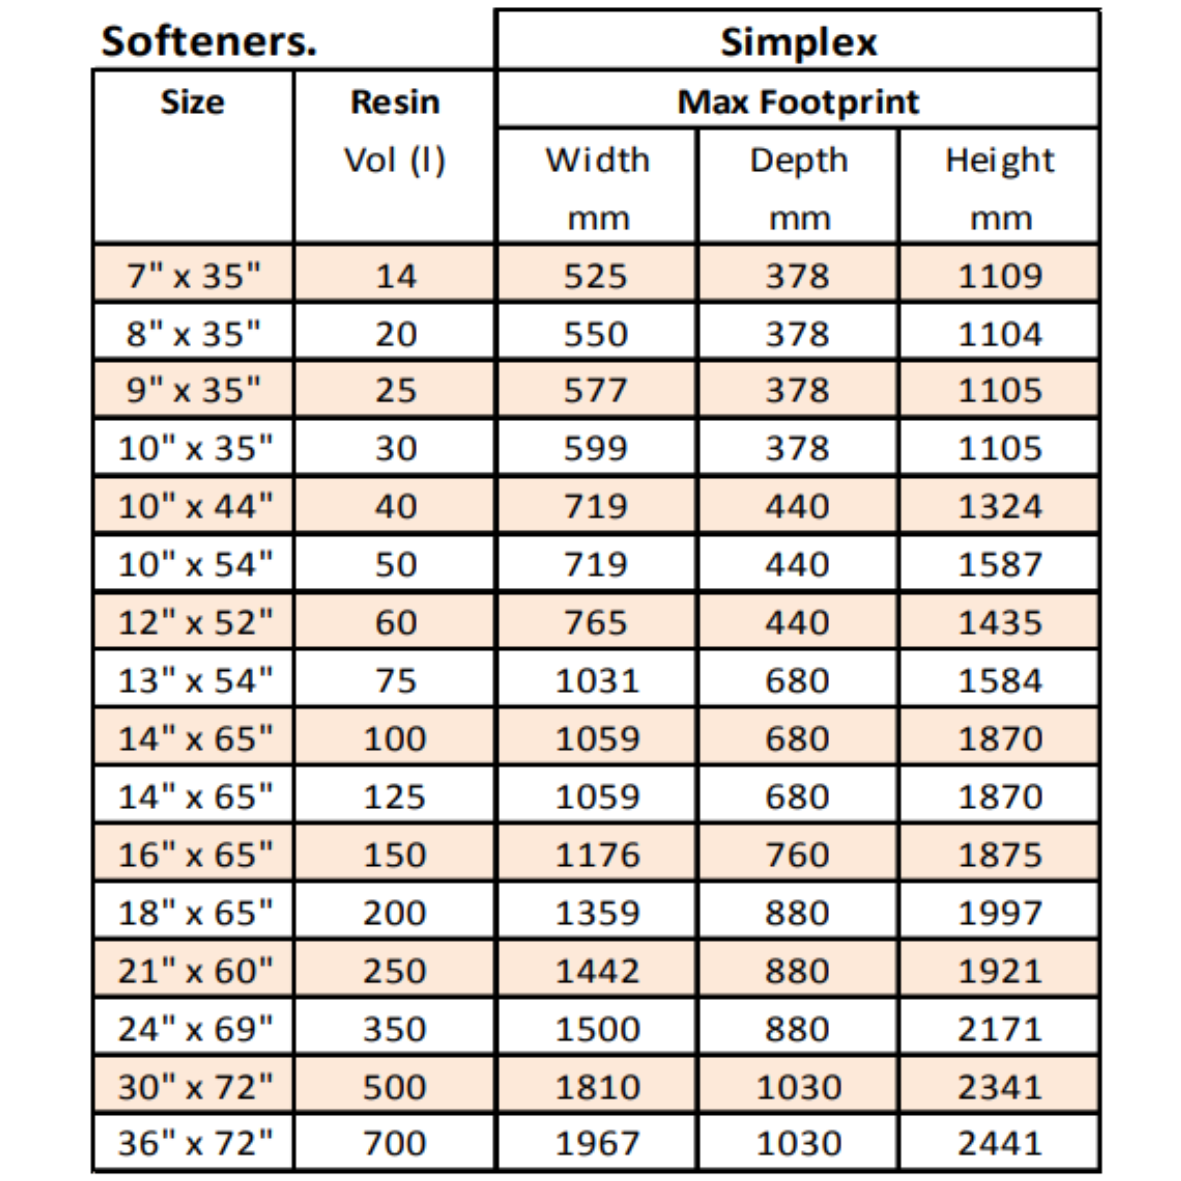 8" x 35", 20L, Simplex Water Softener, Autotrol 255 Time Controller, 0.8m³/hr